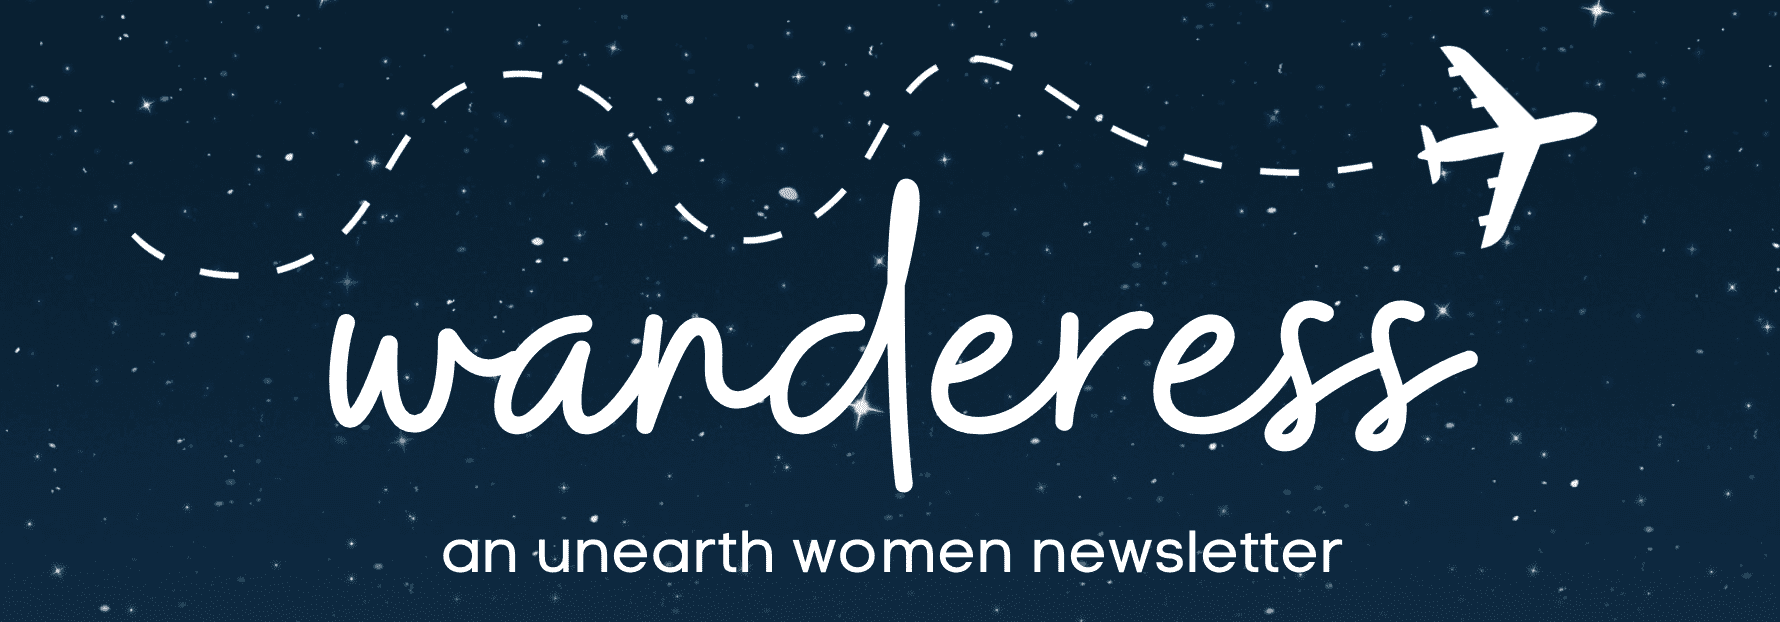 wanderess new newsletter